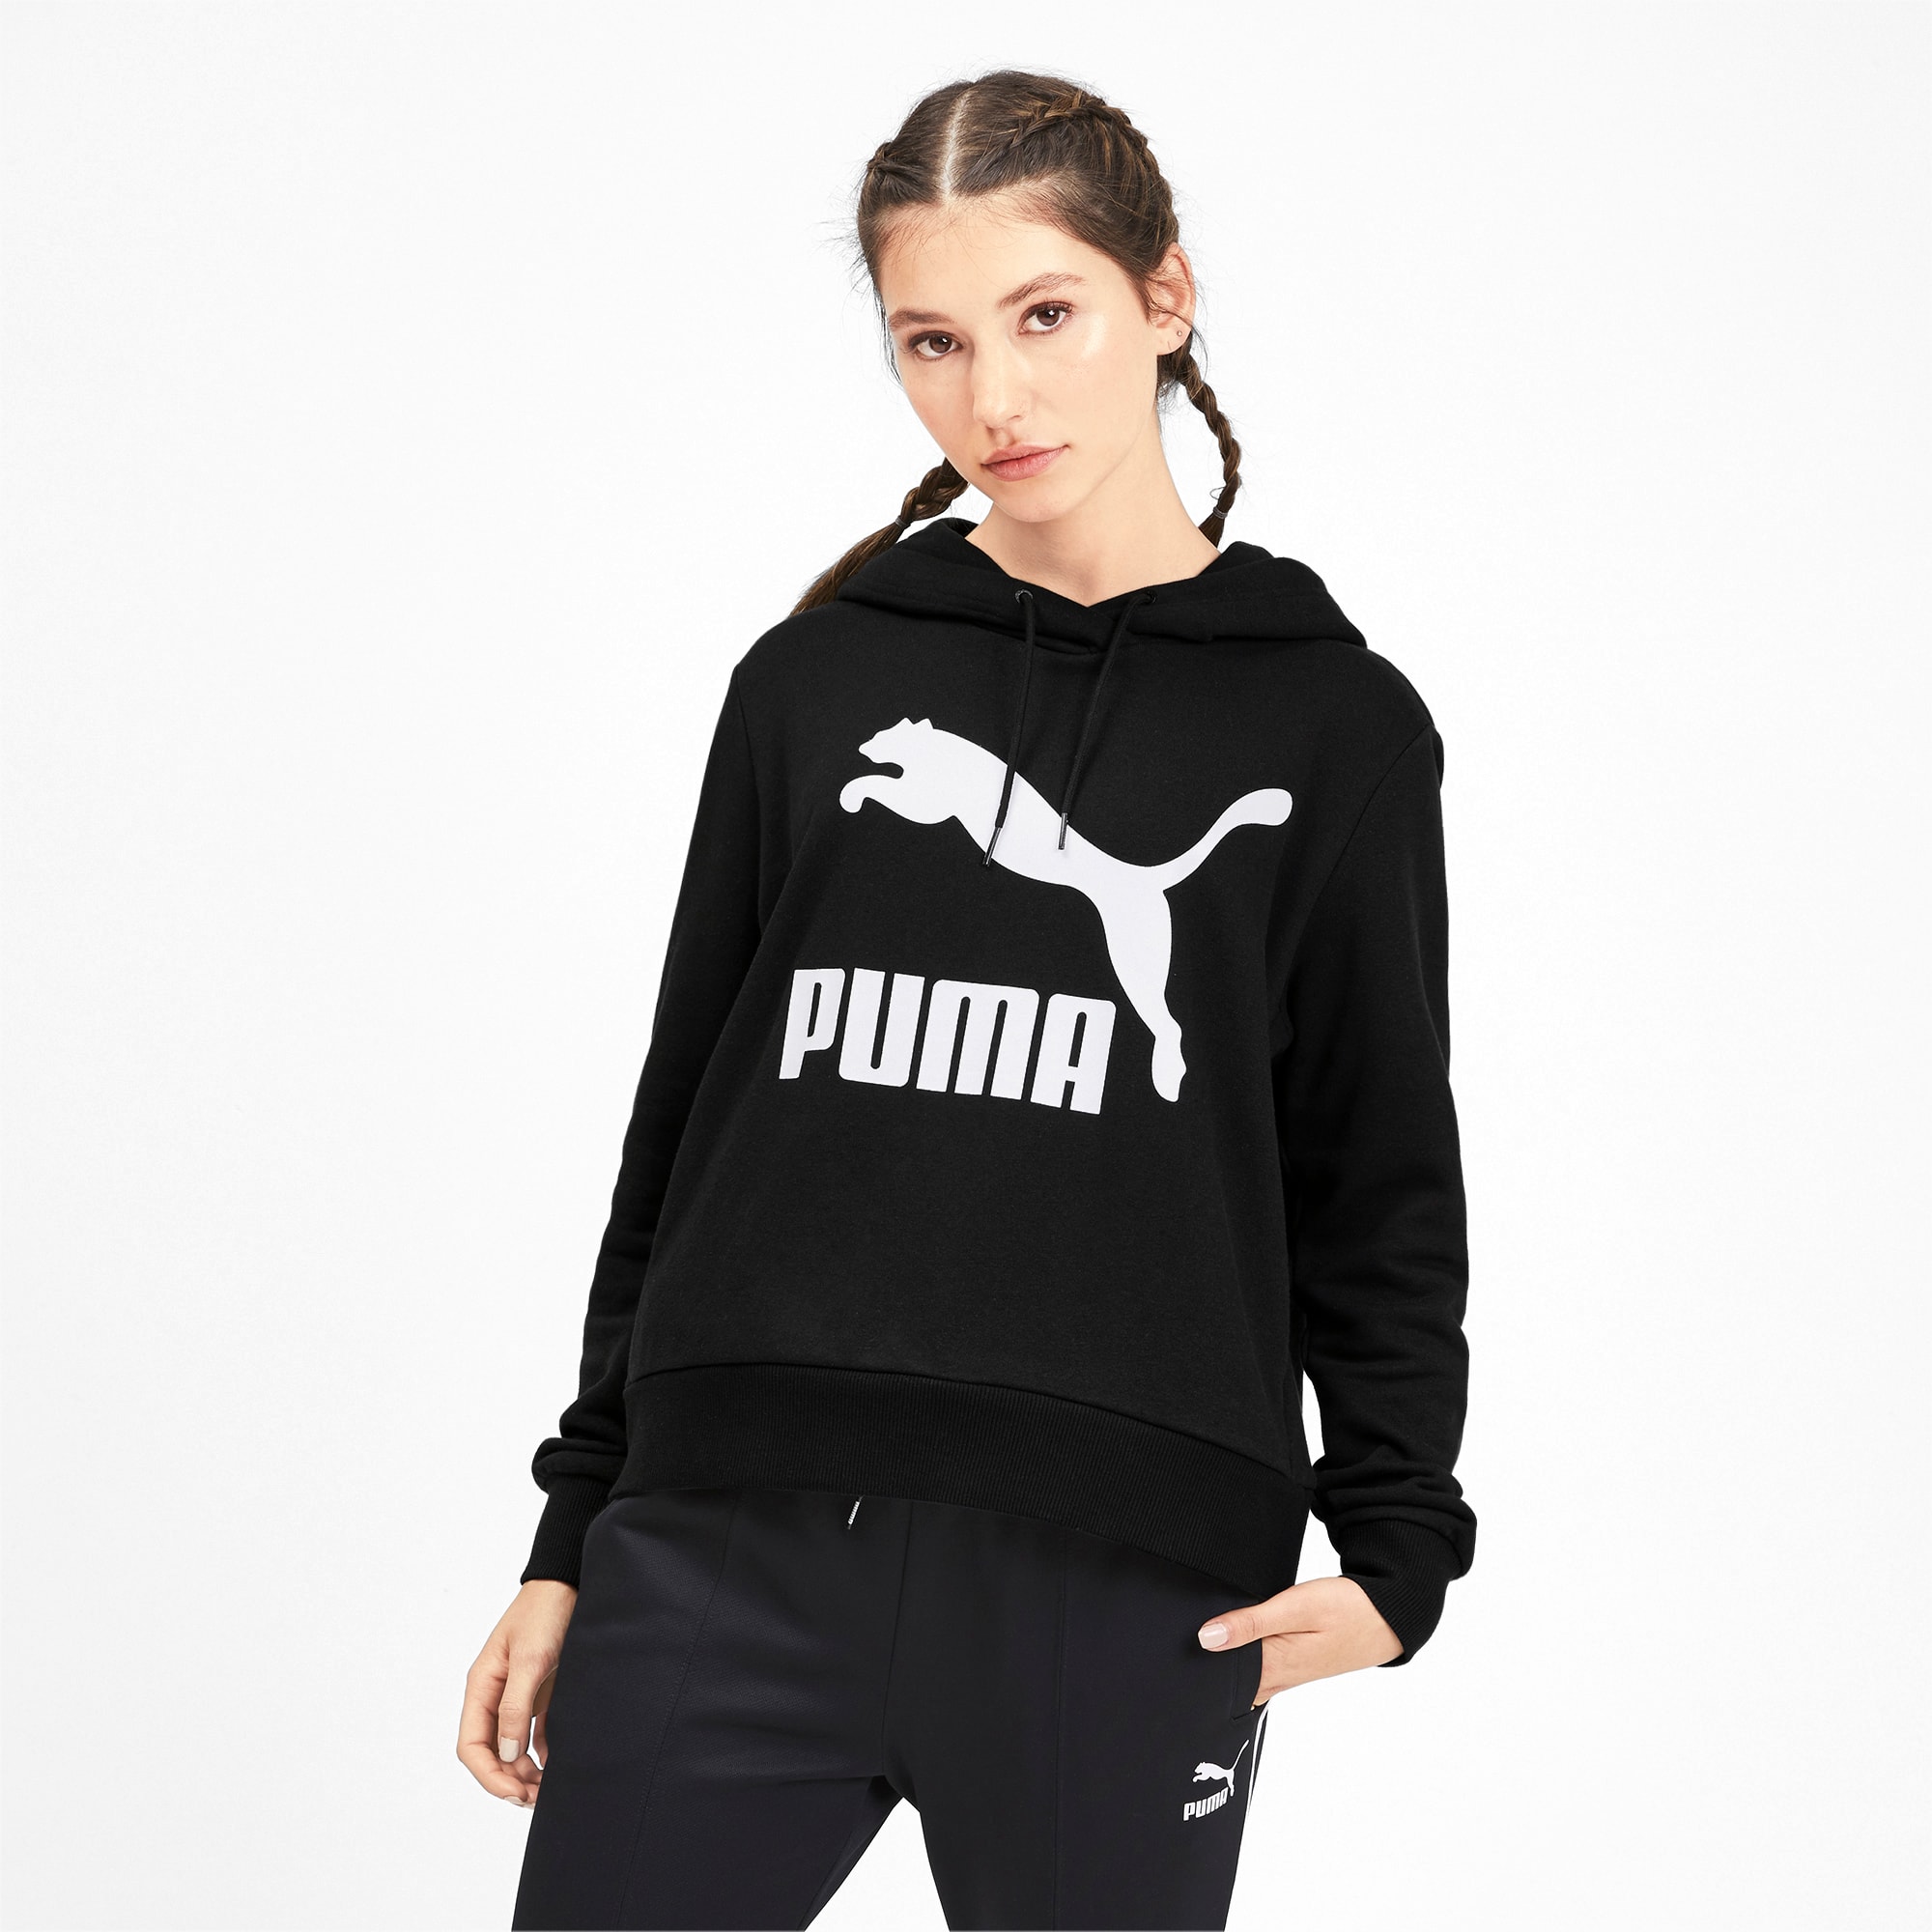 Puma Womens Ignite Hooded Top W Sweatshirt